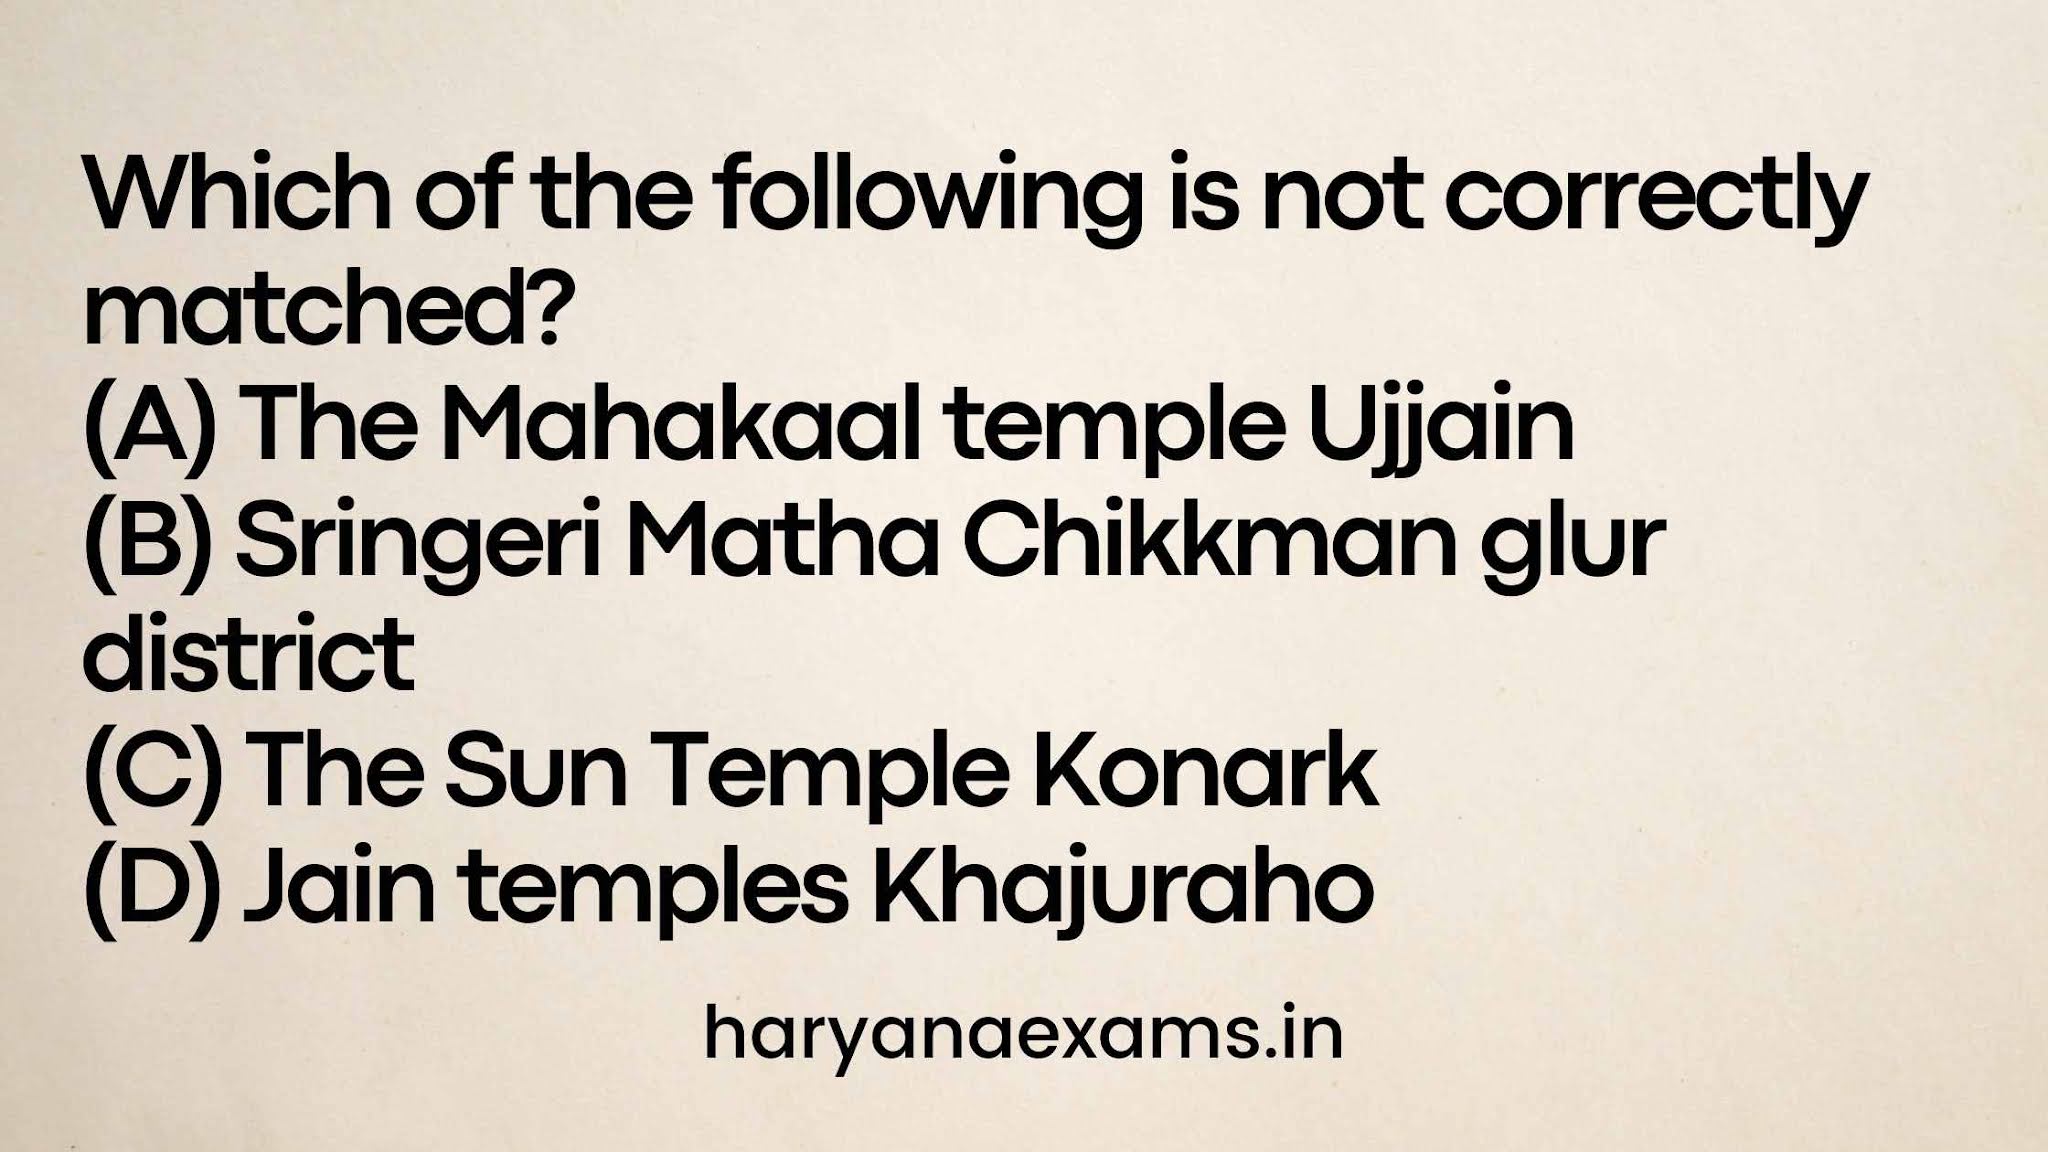 Which of the following is not correctly matched? (A) The Mahakaal temple Ujjain (B) Sringeri Matha Chikkman glur district (C) The Sun Temple Konark (D) Jain temples Khajuraho